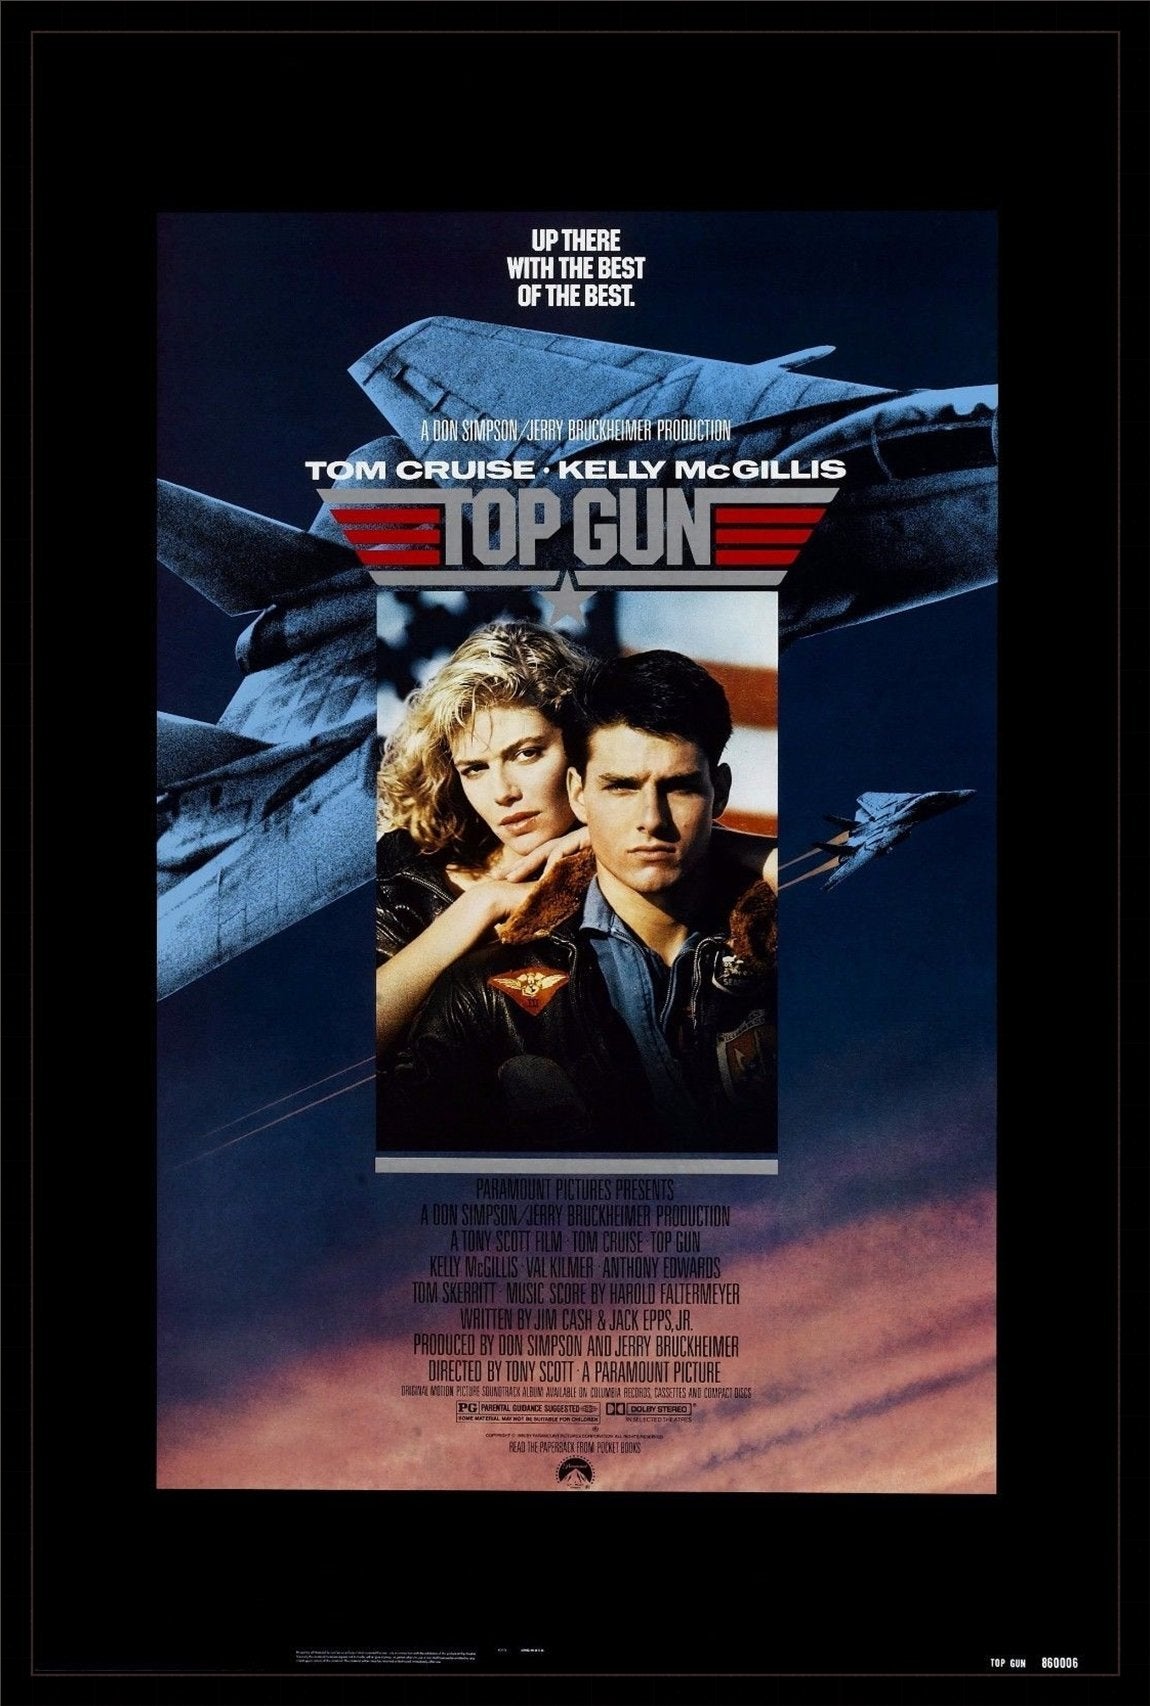 An original movie poster for the film Top Gun